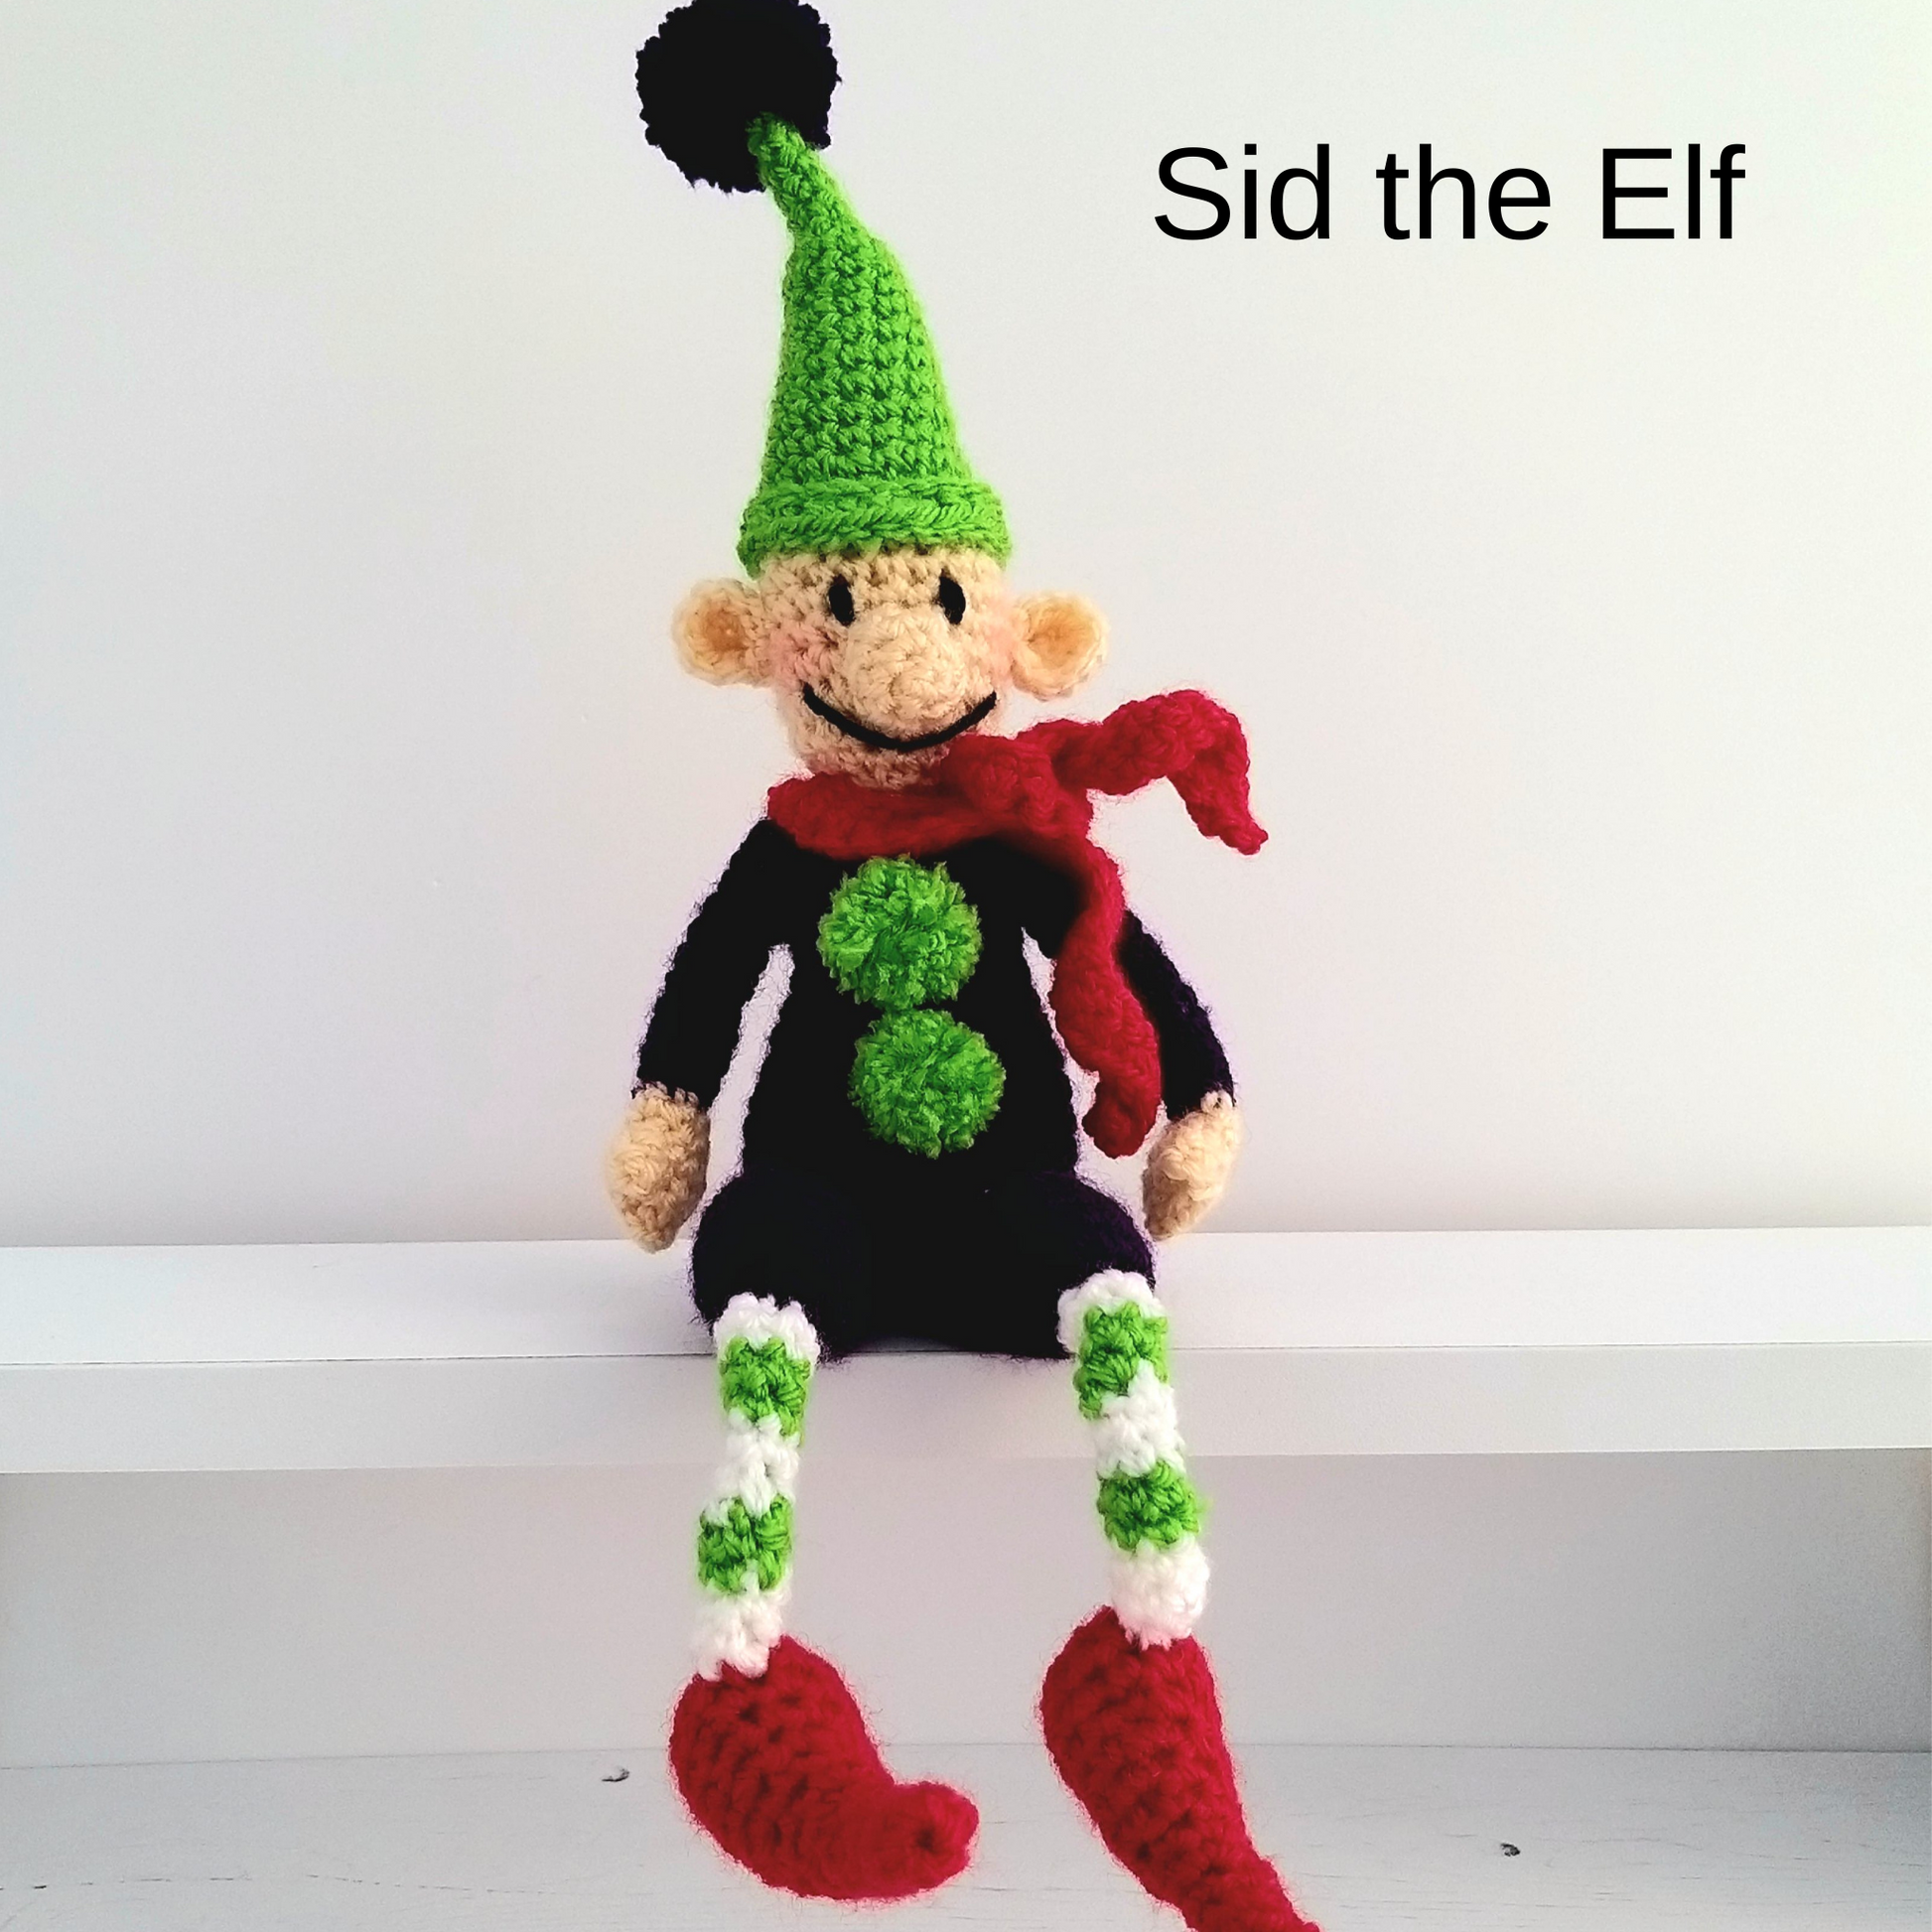 Sid the Elf